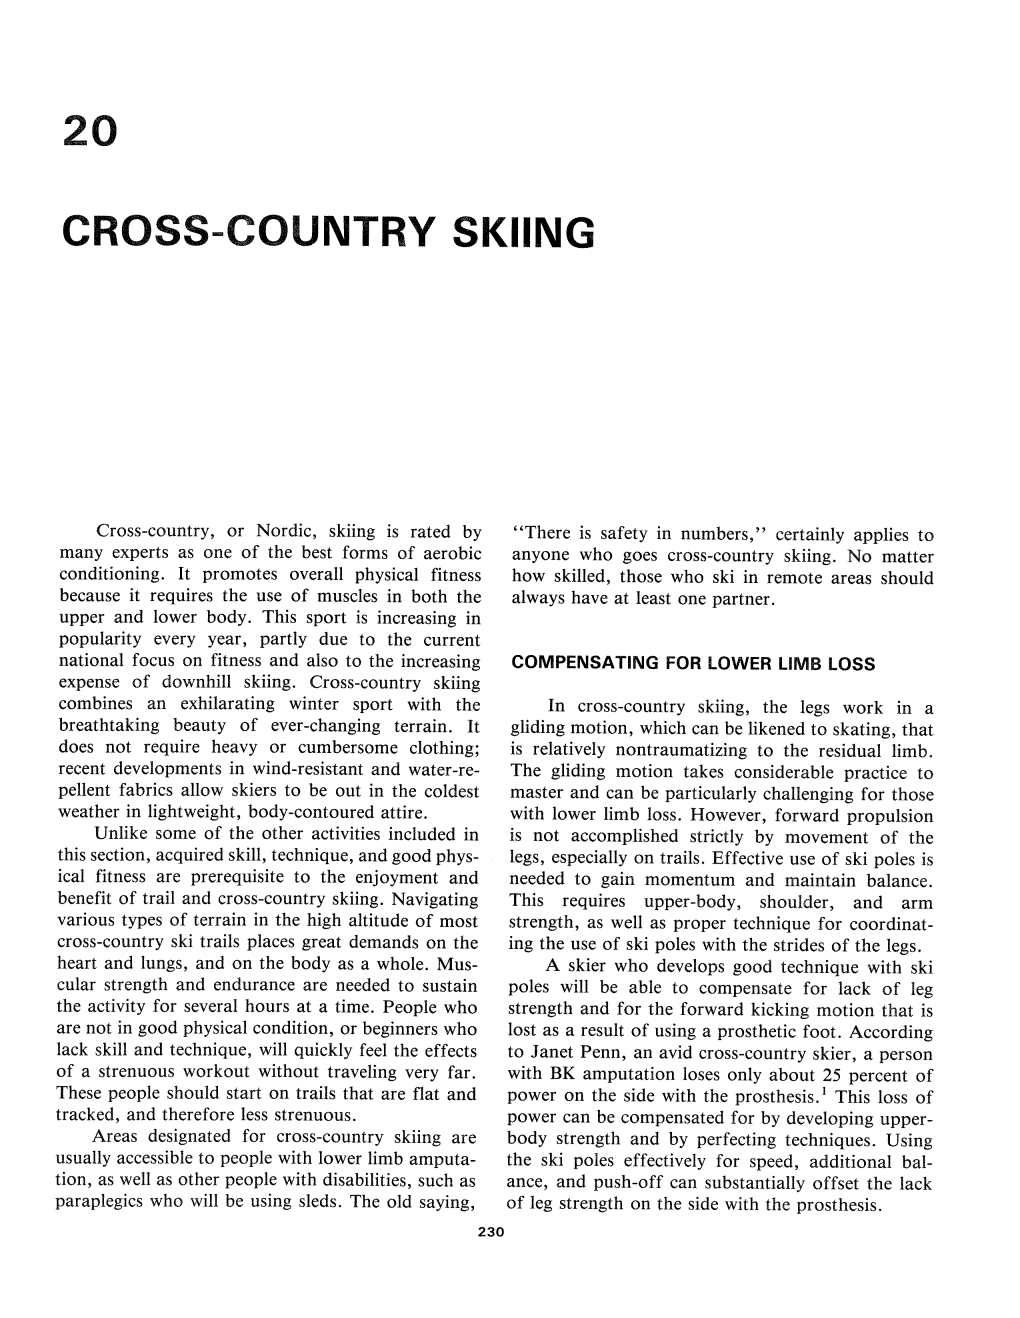 20. Cross-Country Skiing